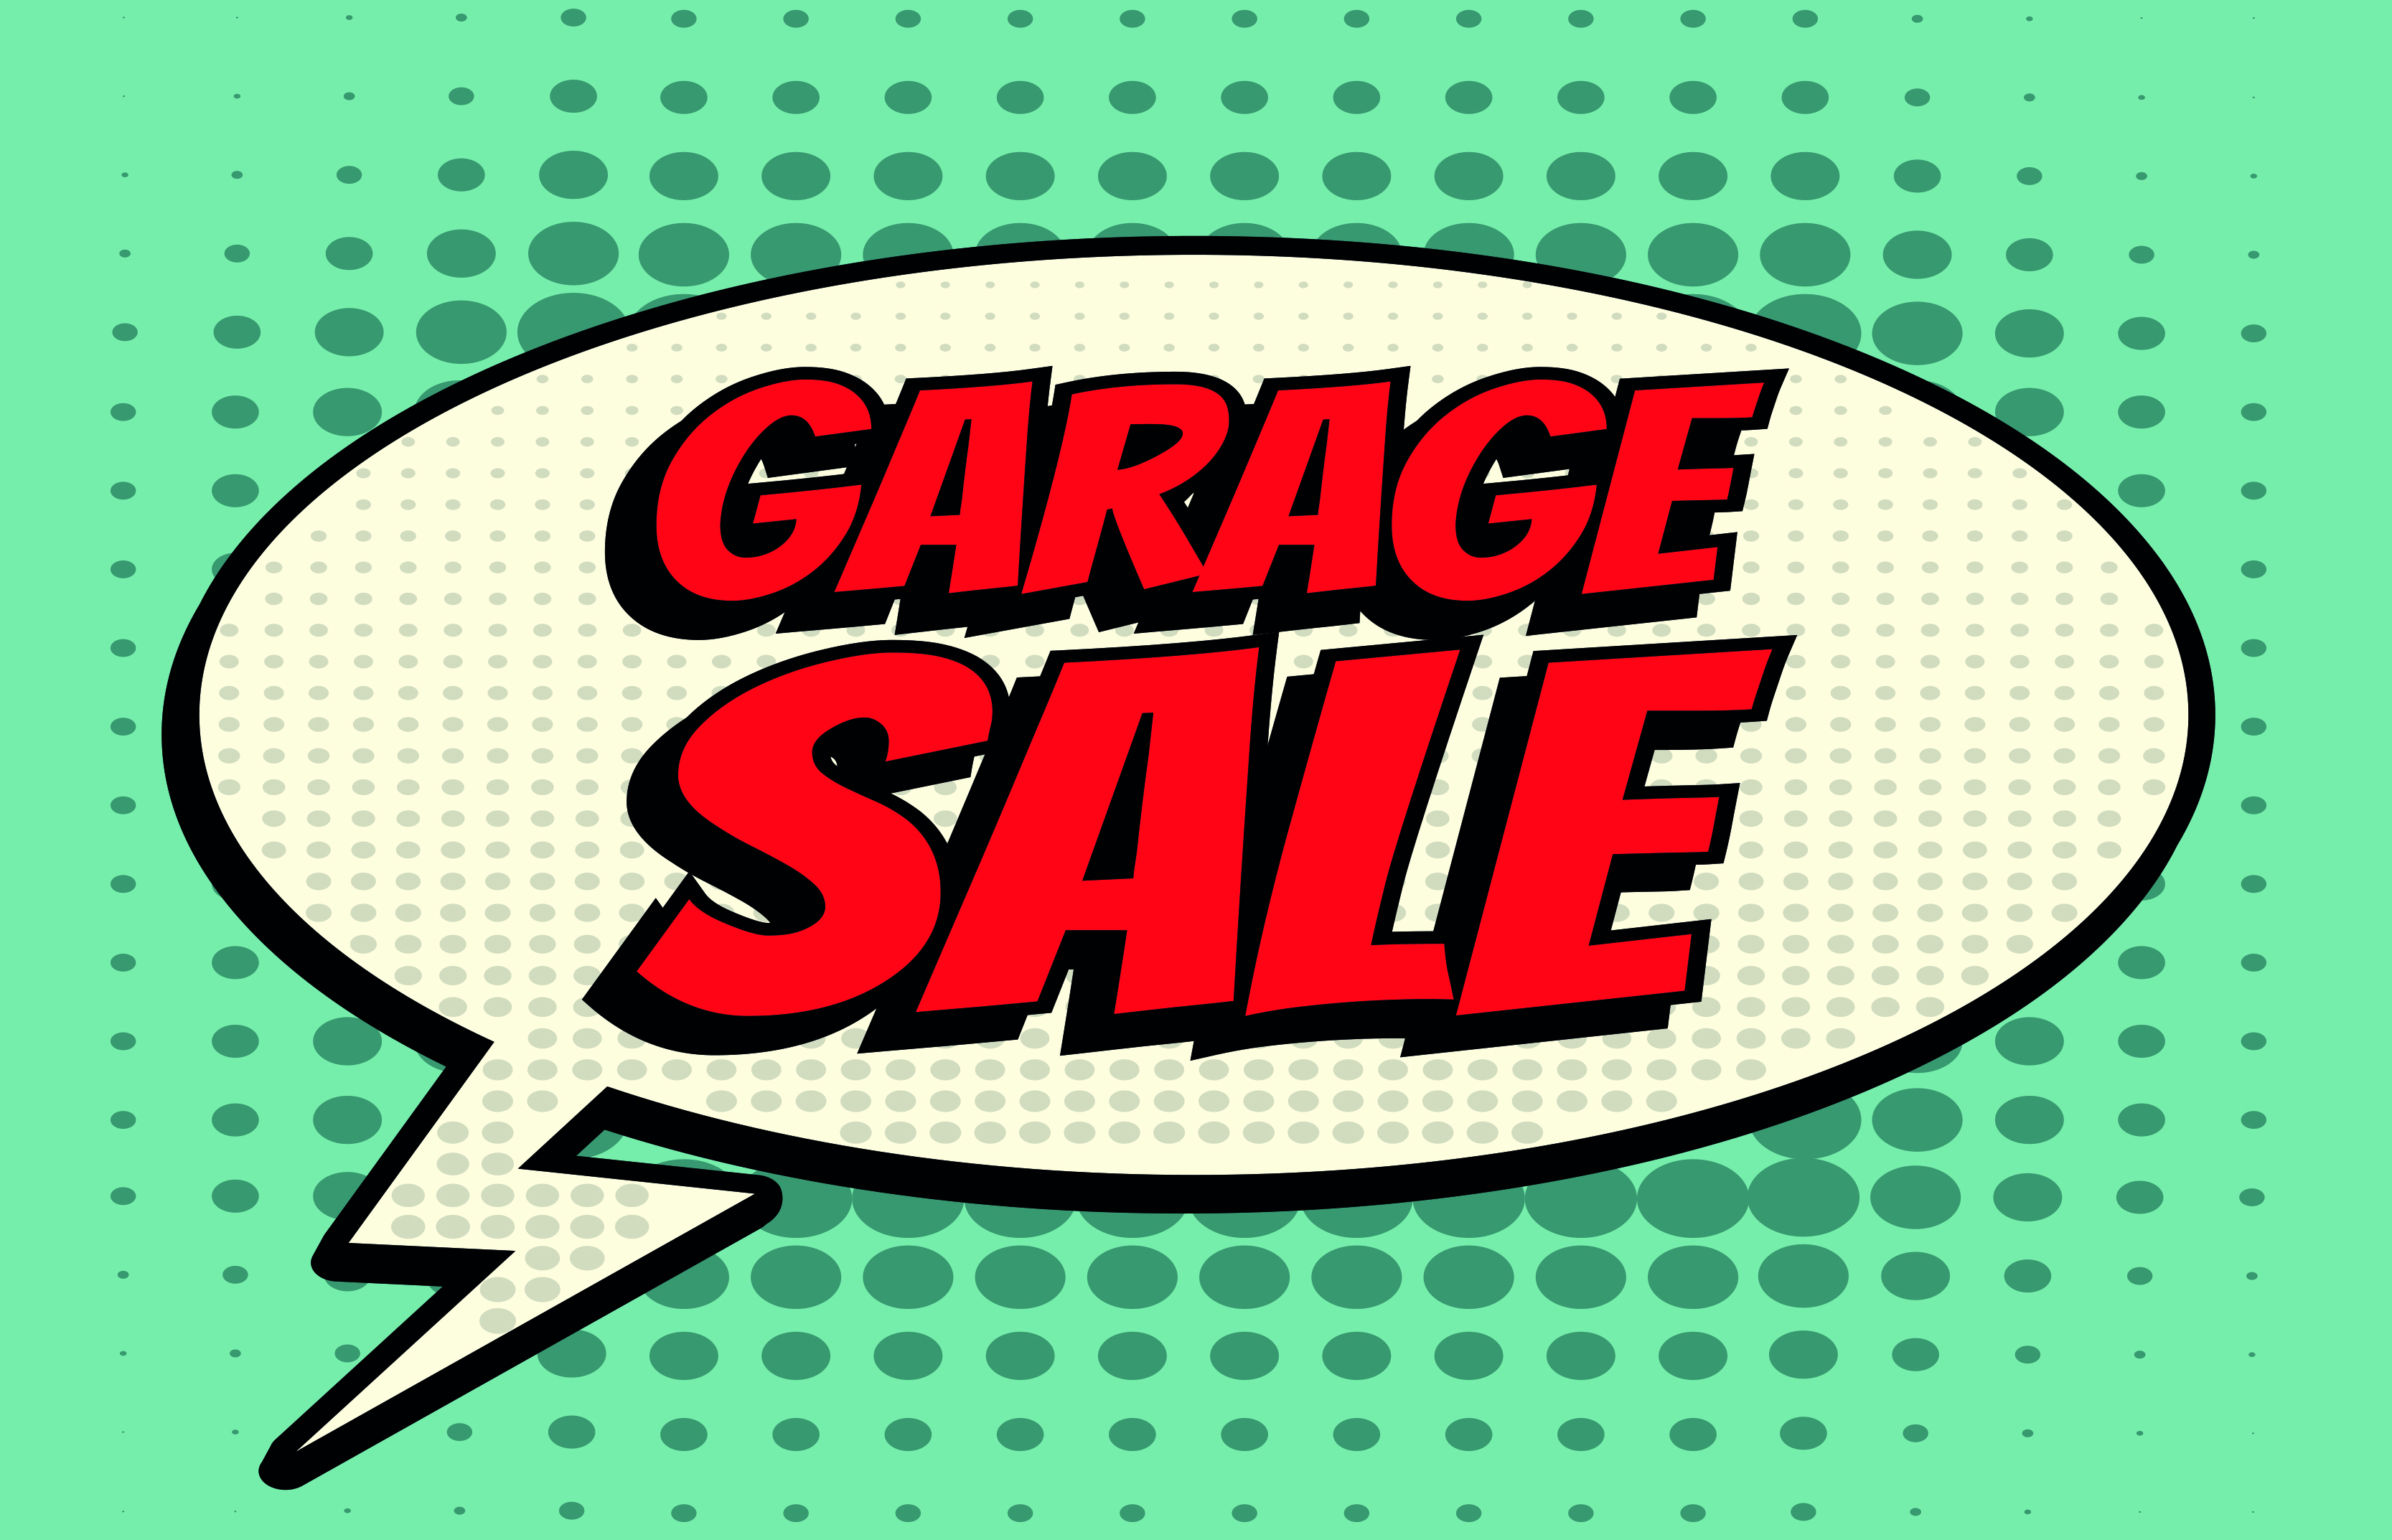 Cypress / Highway 6 Garage Sales In March